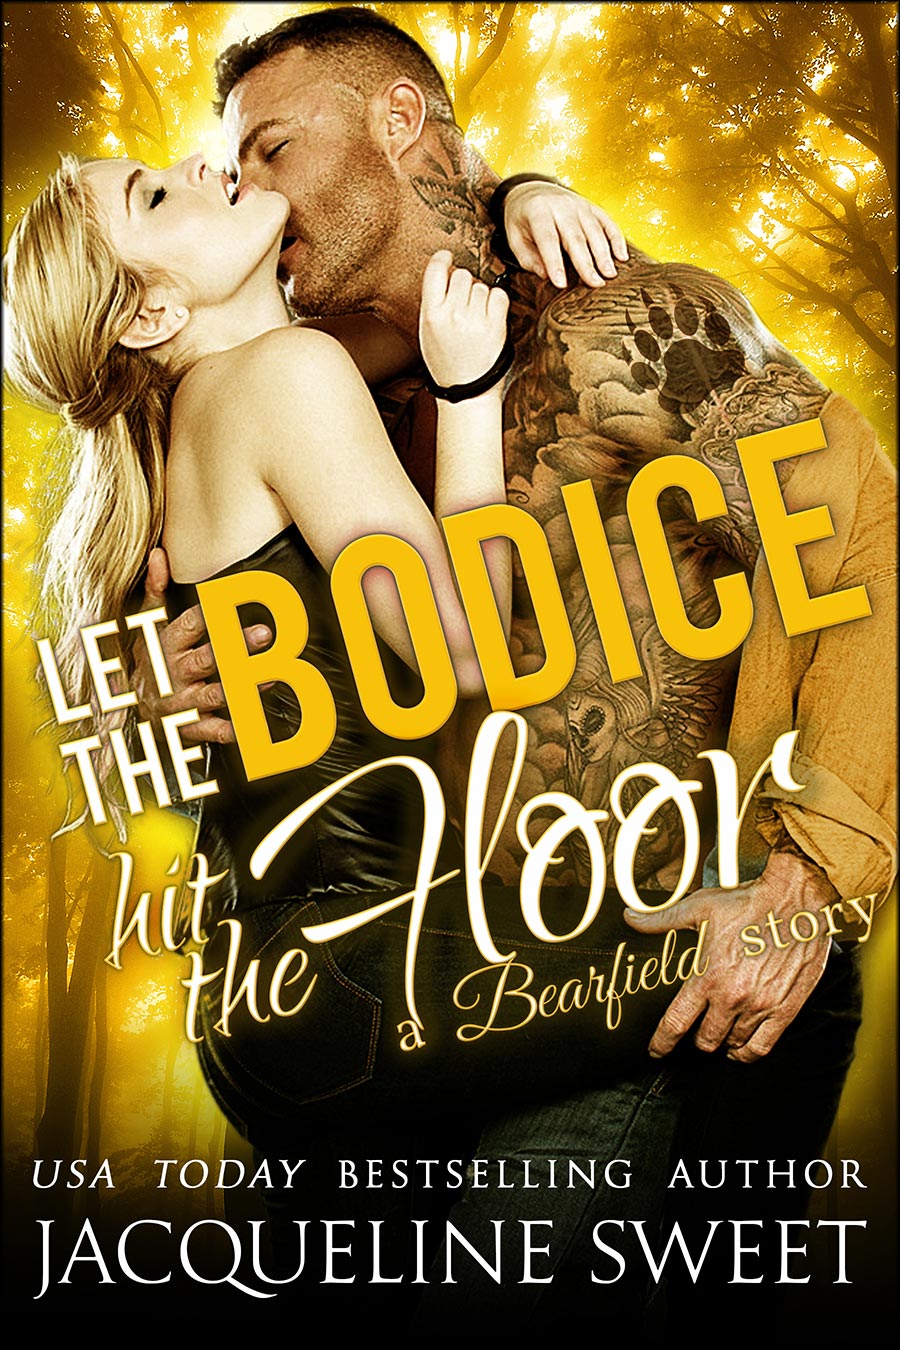 Let-the-Bodice-Hit-the-Floor.jpg